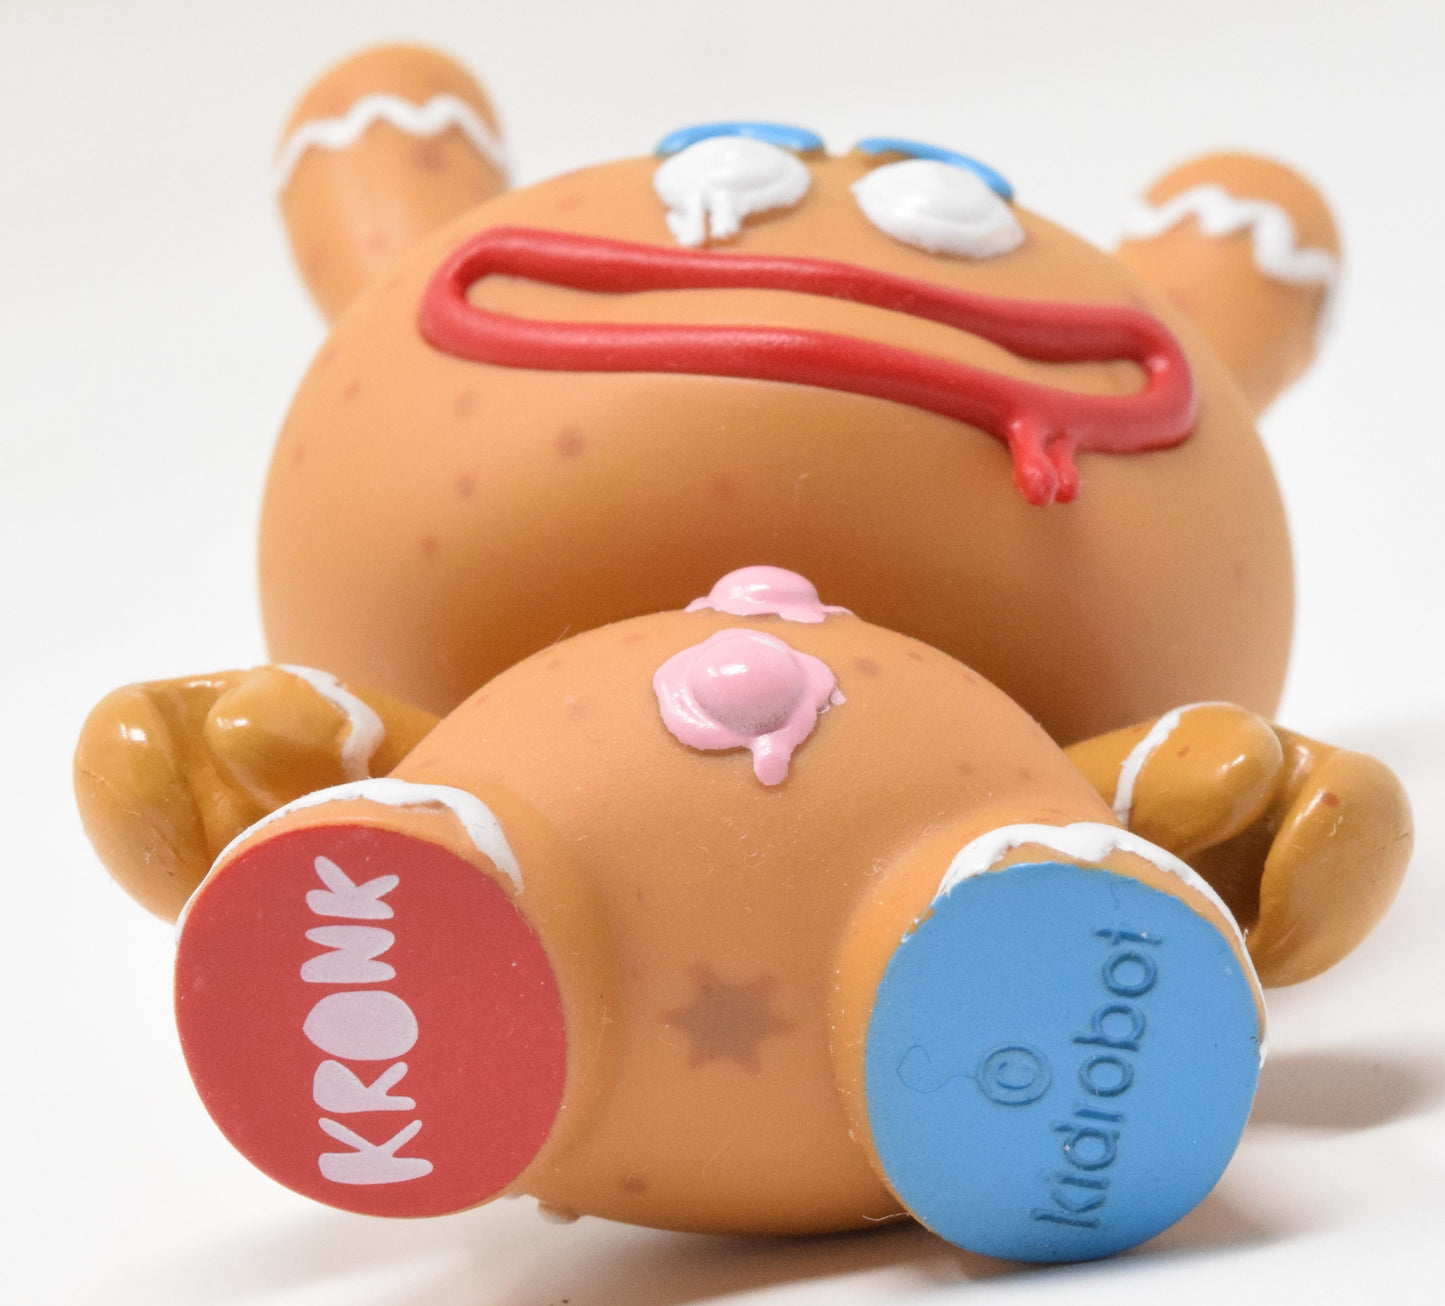 Kidrobot Kronk Dunny Gingerbread Christmas Cookie Vinyl Figure